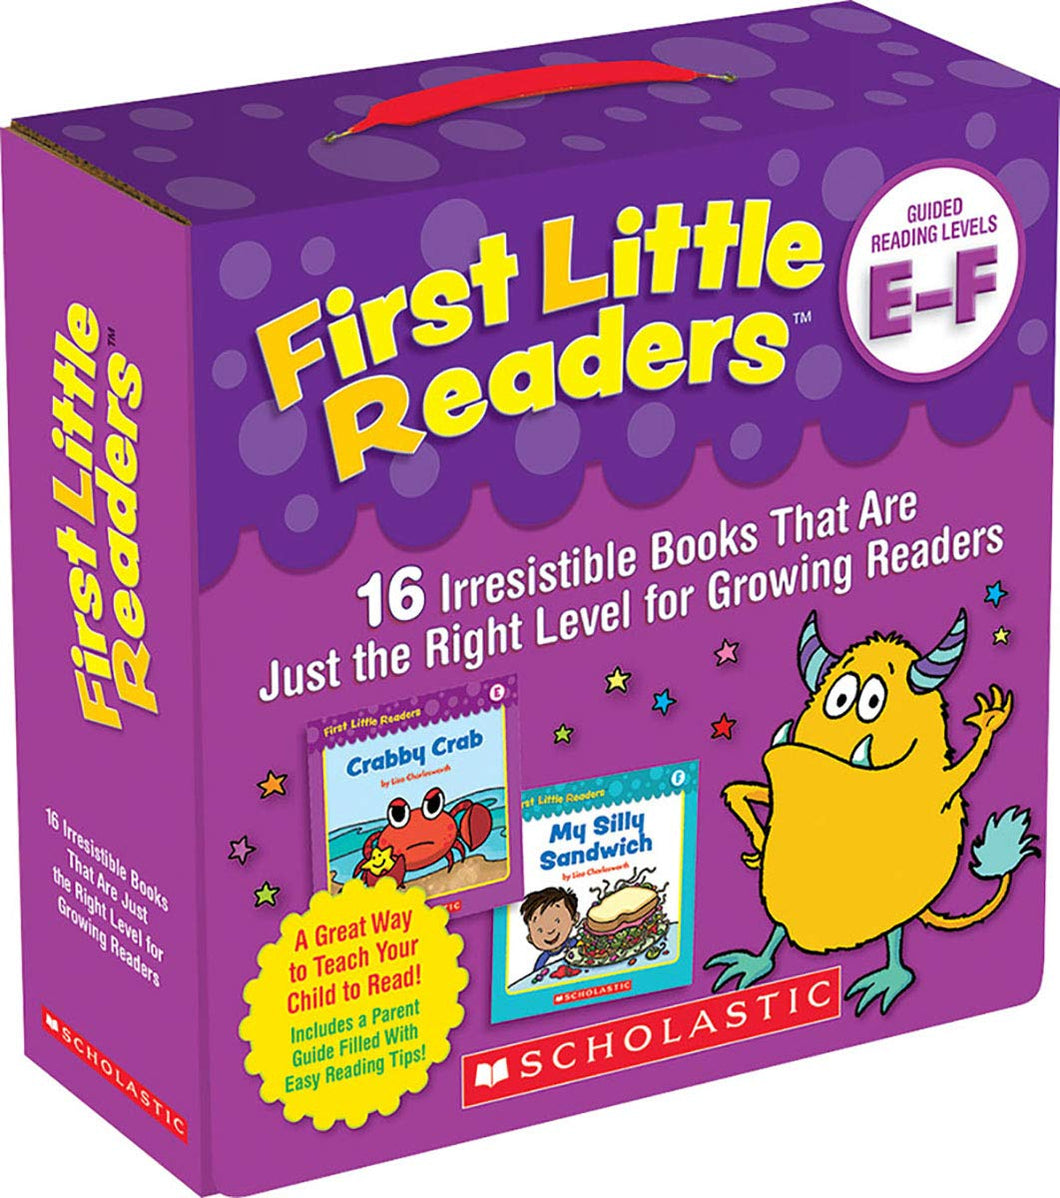 First Little Readers Parent Pack: Guided Reading Level E&F esikidz marketplace children books preschool books 